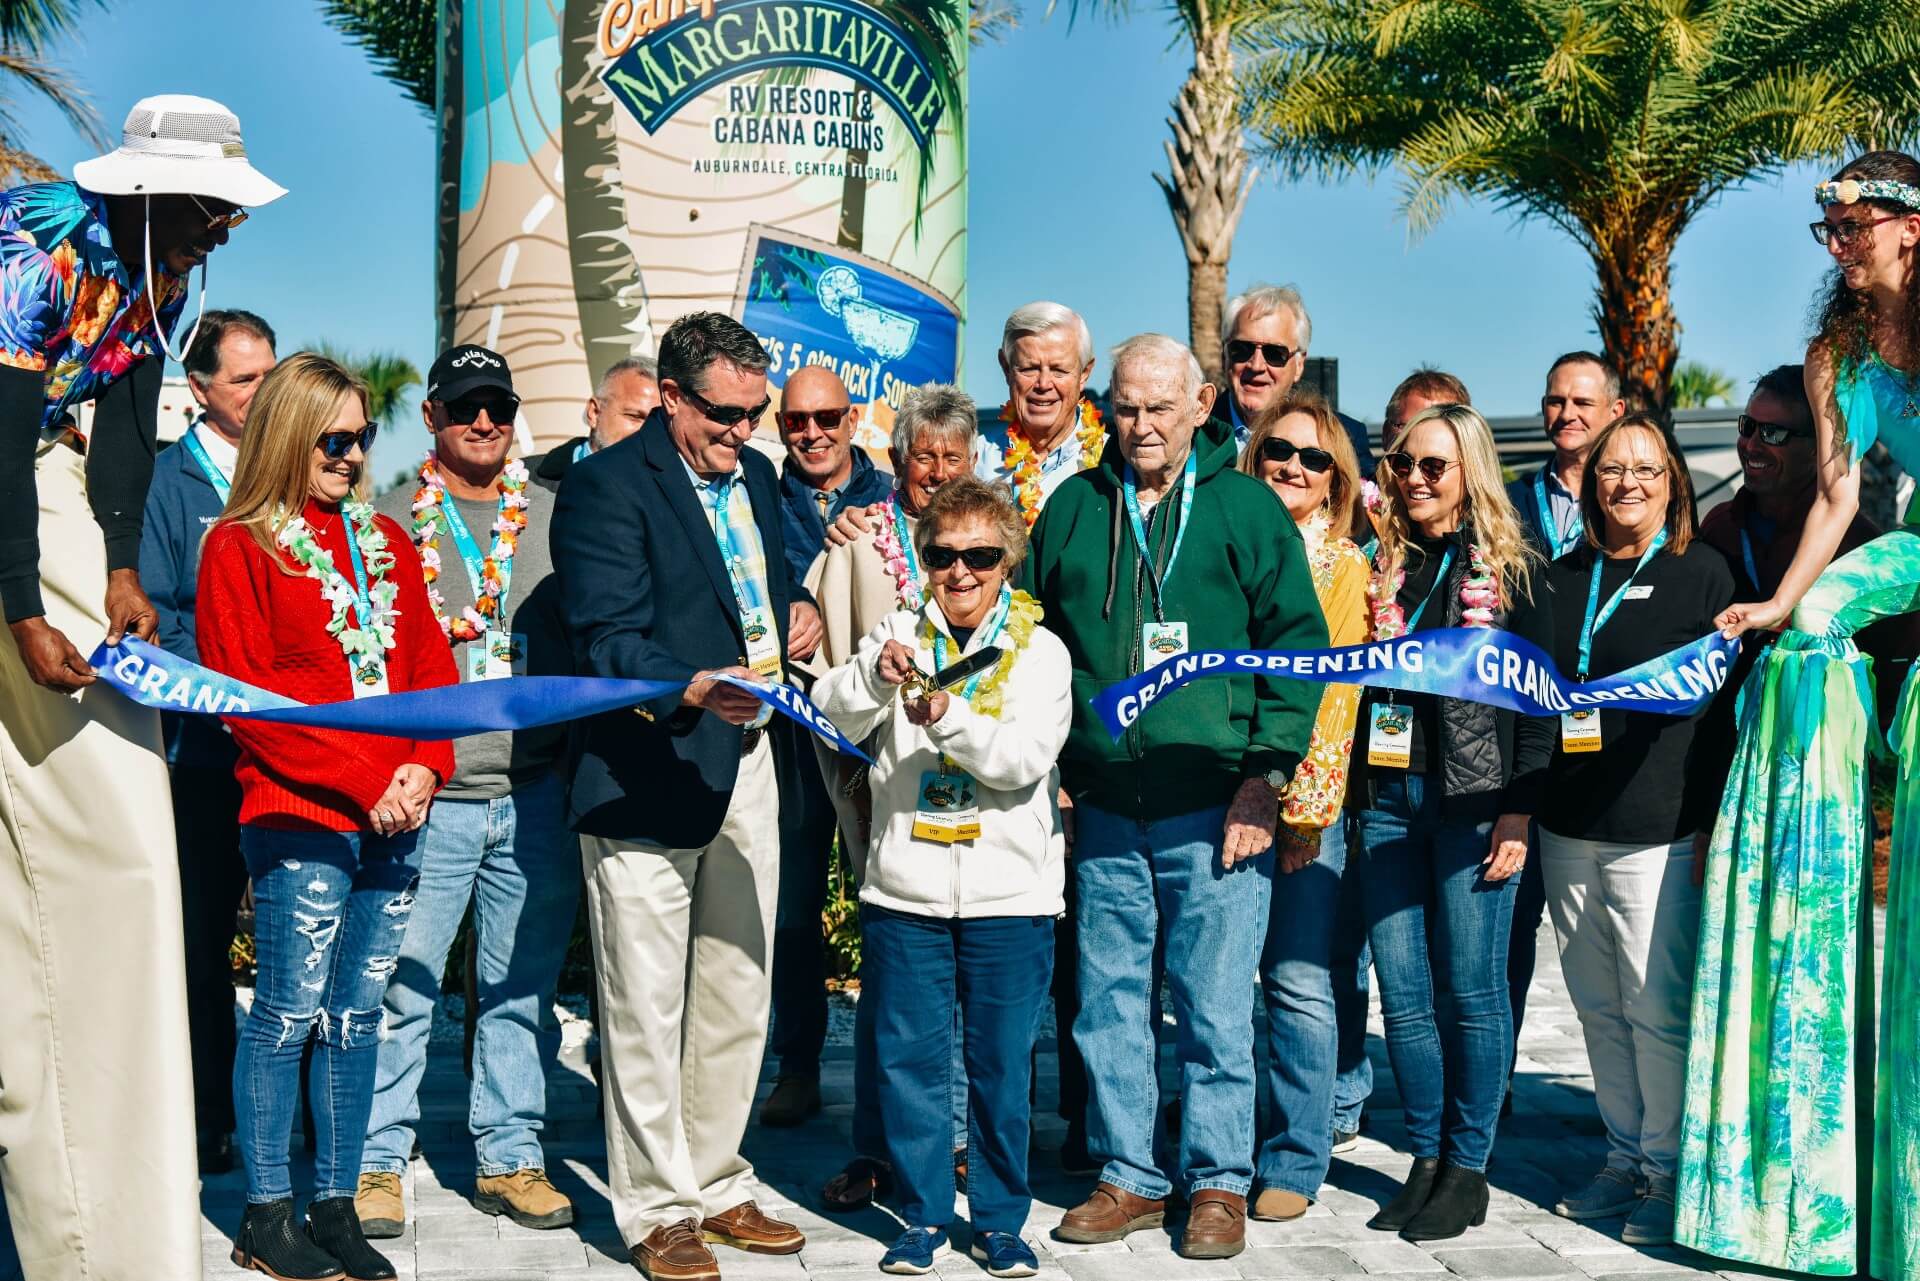 Camp Margaritaville RV Resort & Cabana Cabins Auburndale, Florida Central abre oficialmente